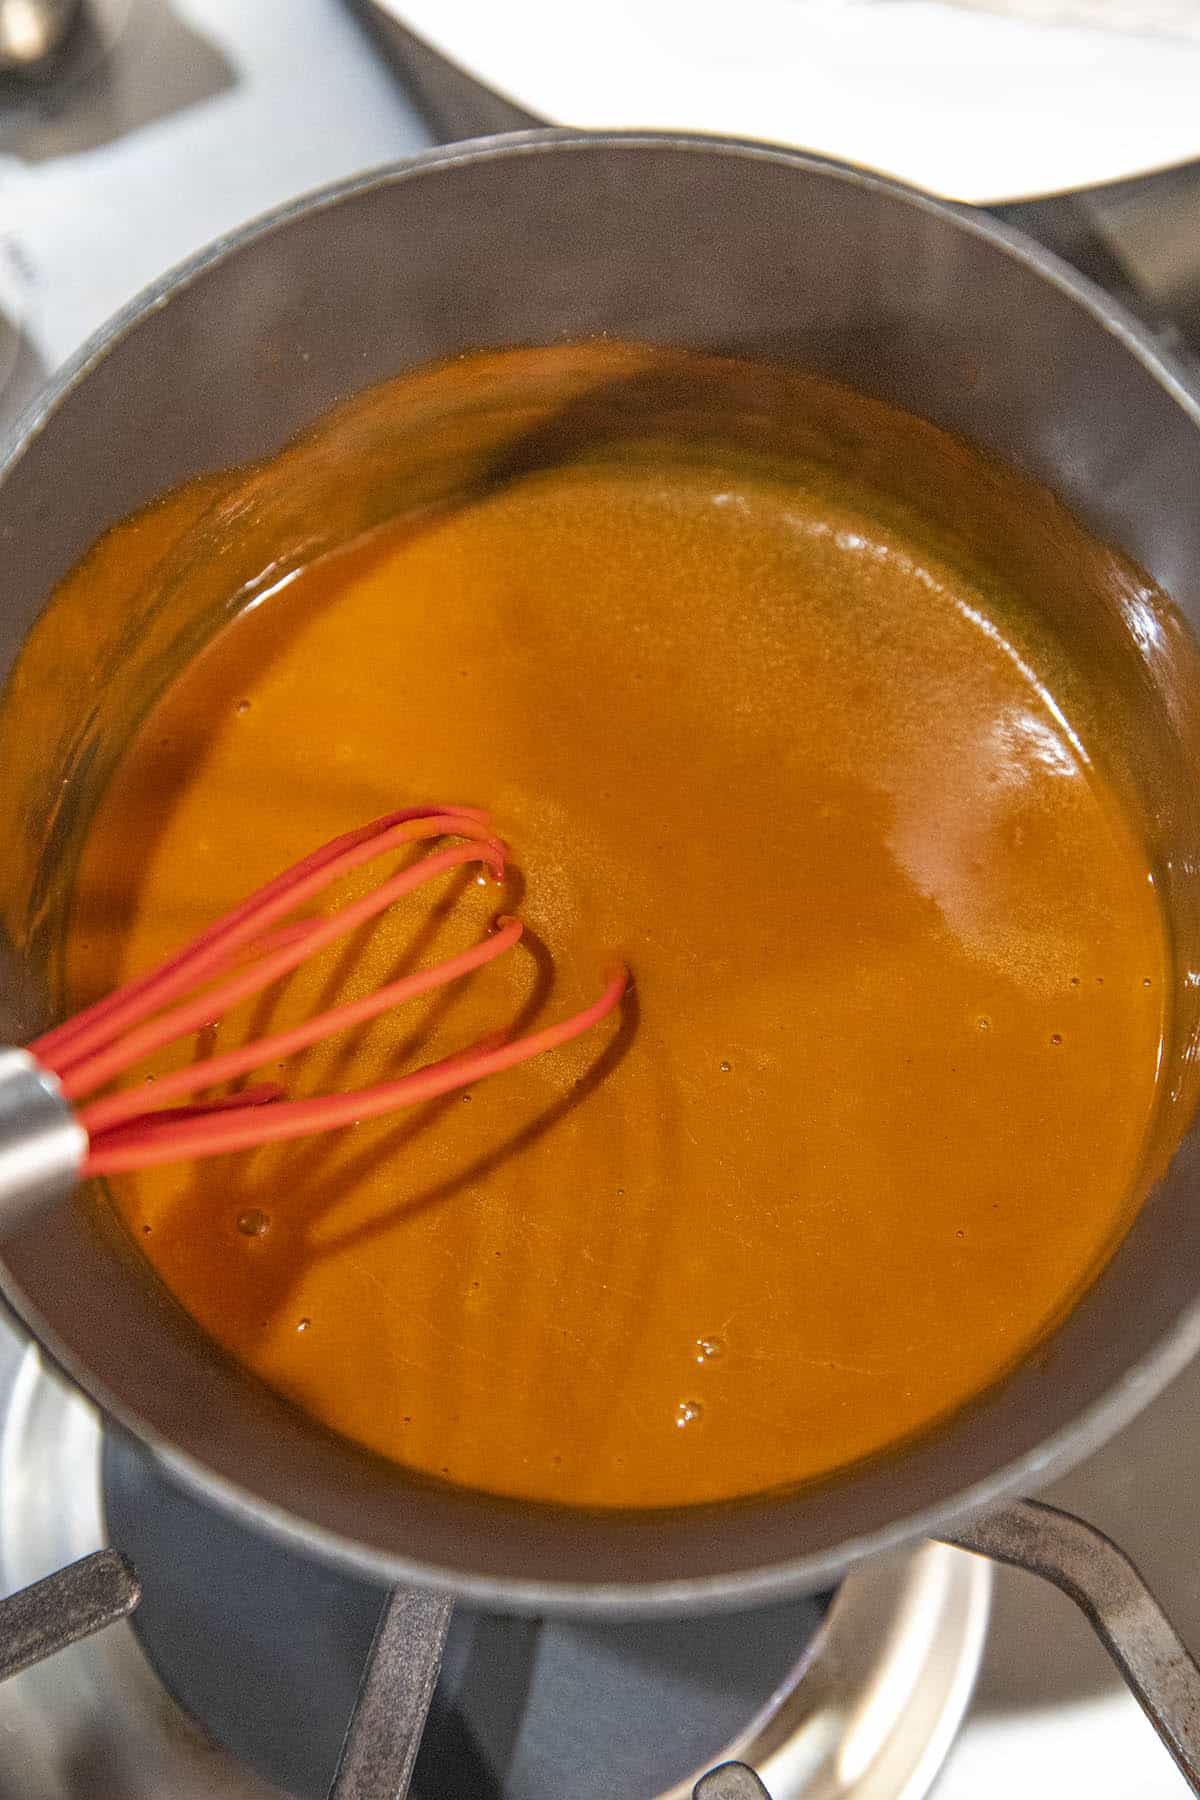 Making Buffalo sauce in a pan